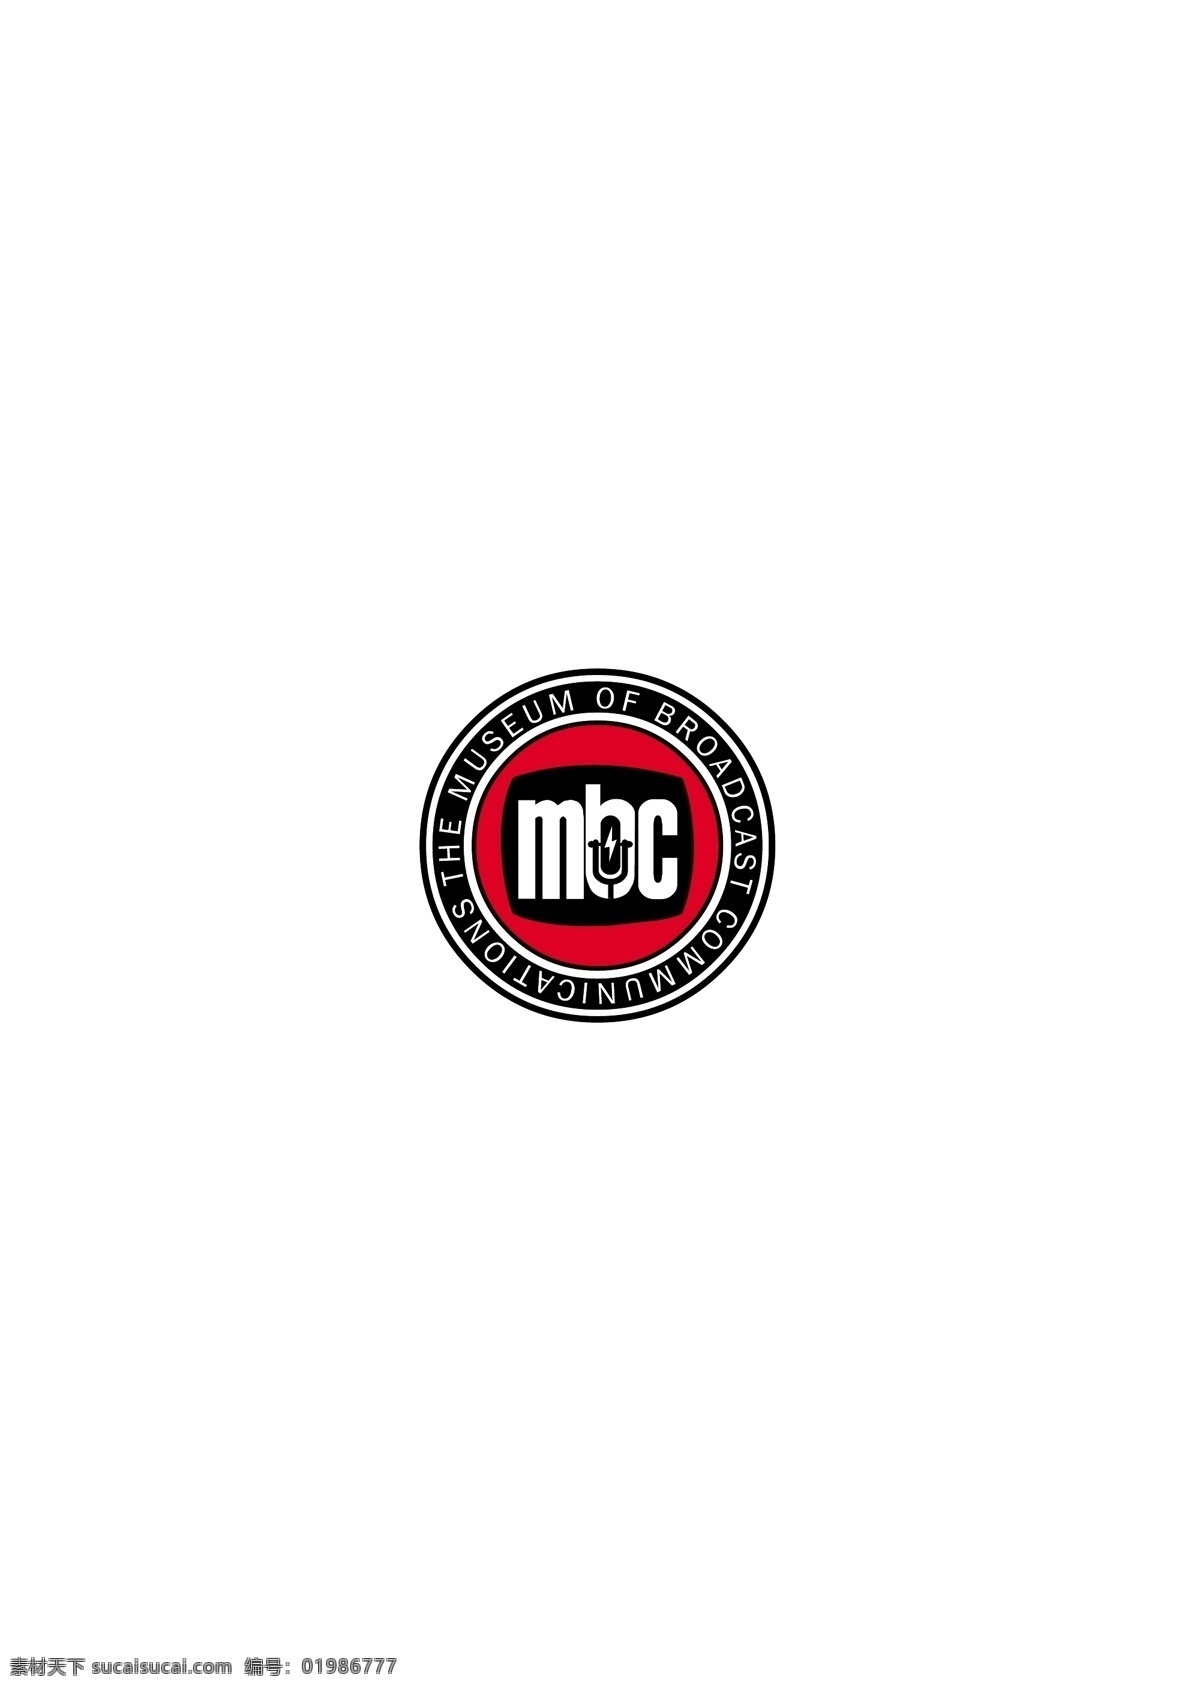 mbc logo大全 logo 设计欣赏 商业矢量 矢量下载 手机 公司 标志设计 欣赏 网页矢量 矢量图 其他矢量图